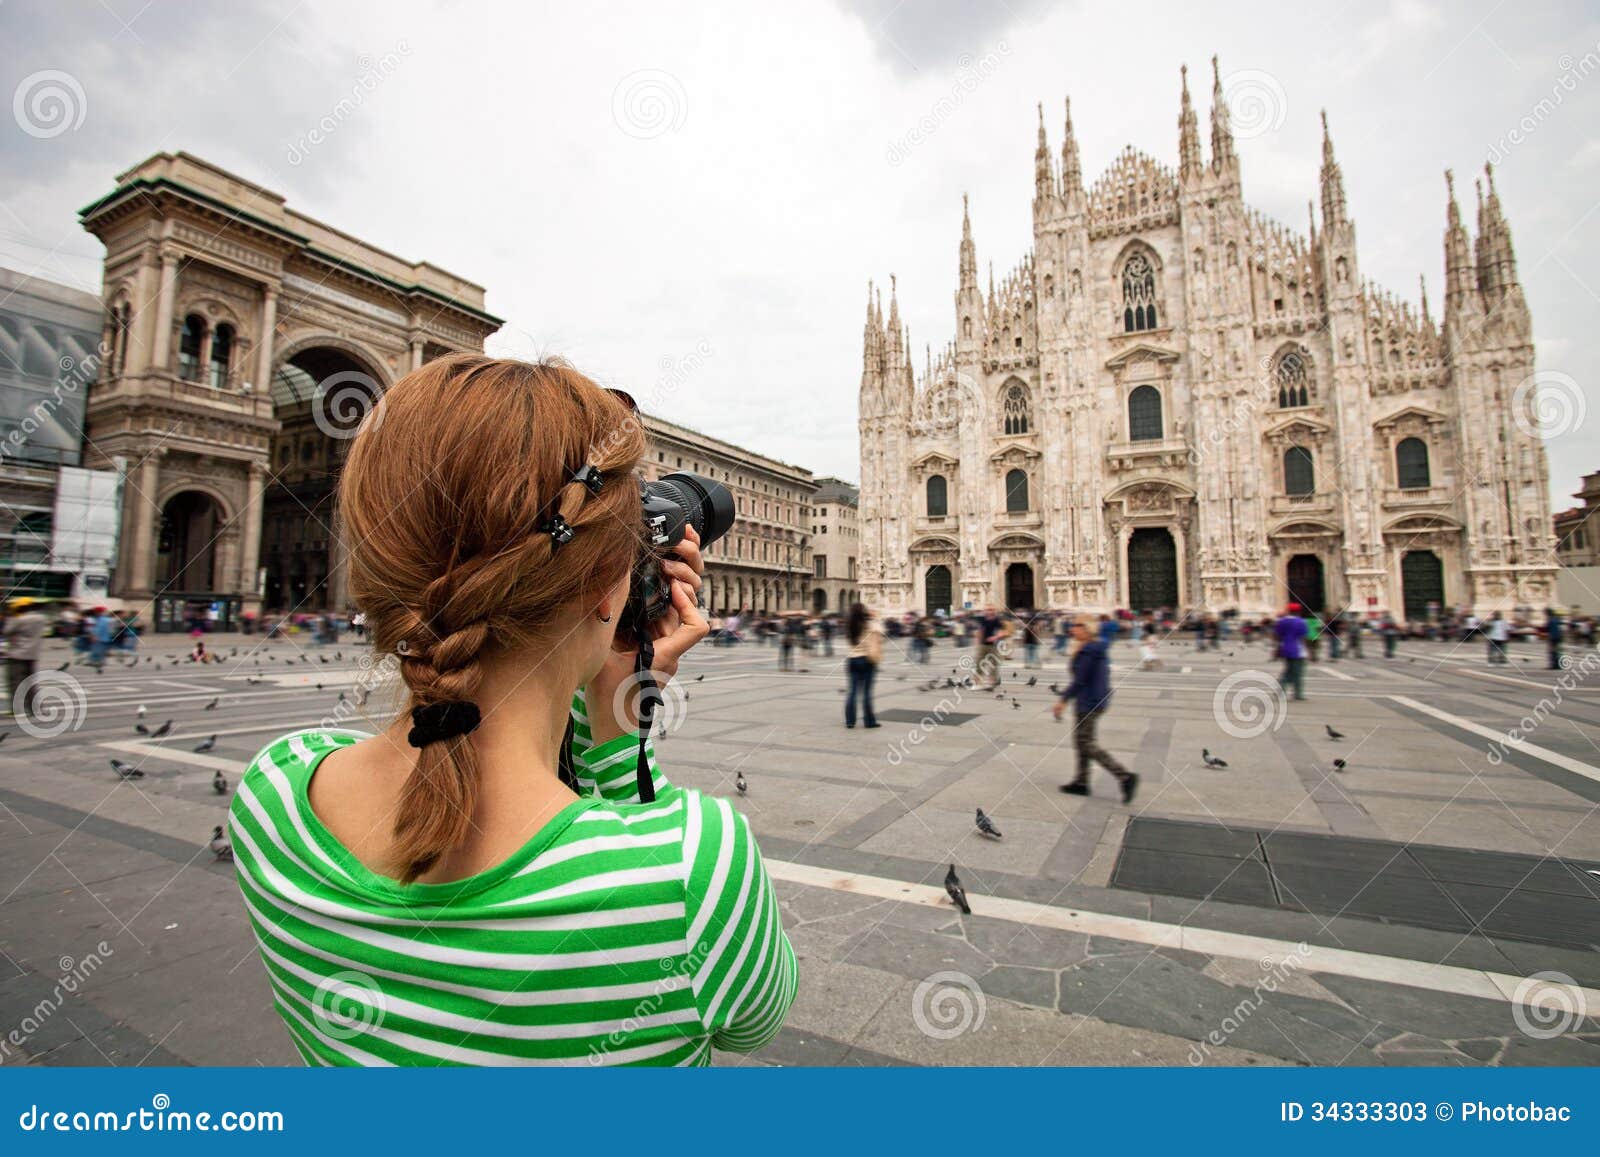 woman taking picture of duomo di milano, italy